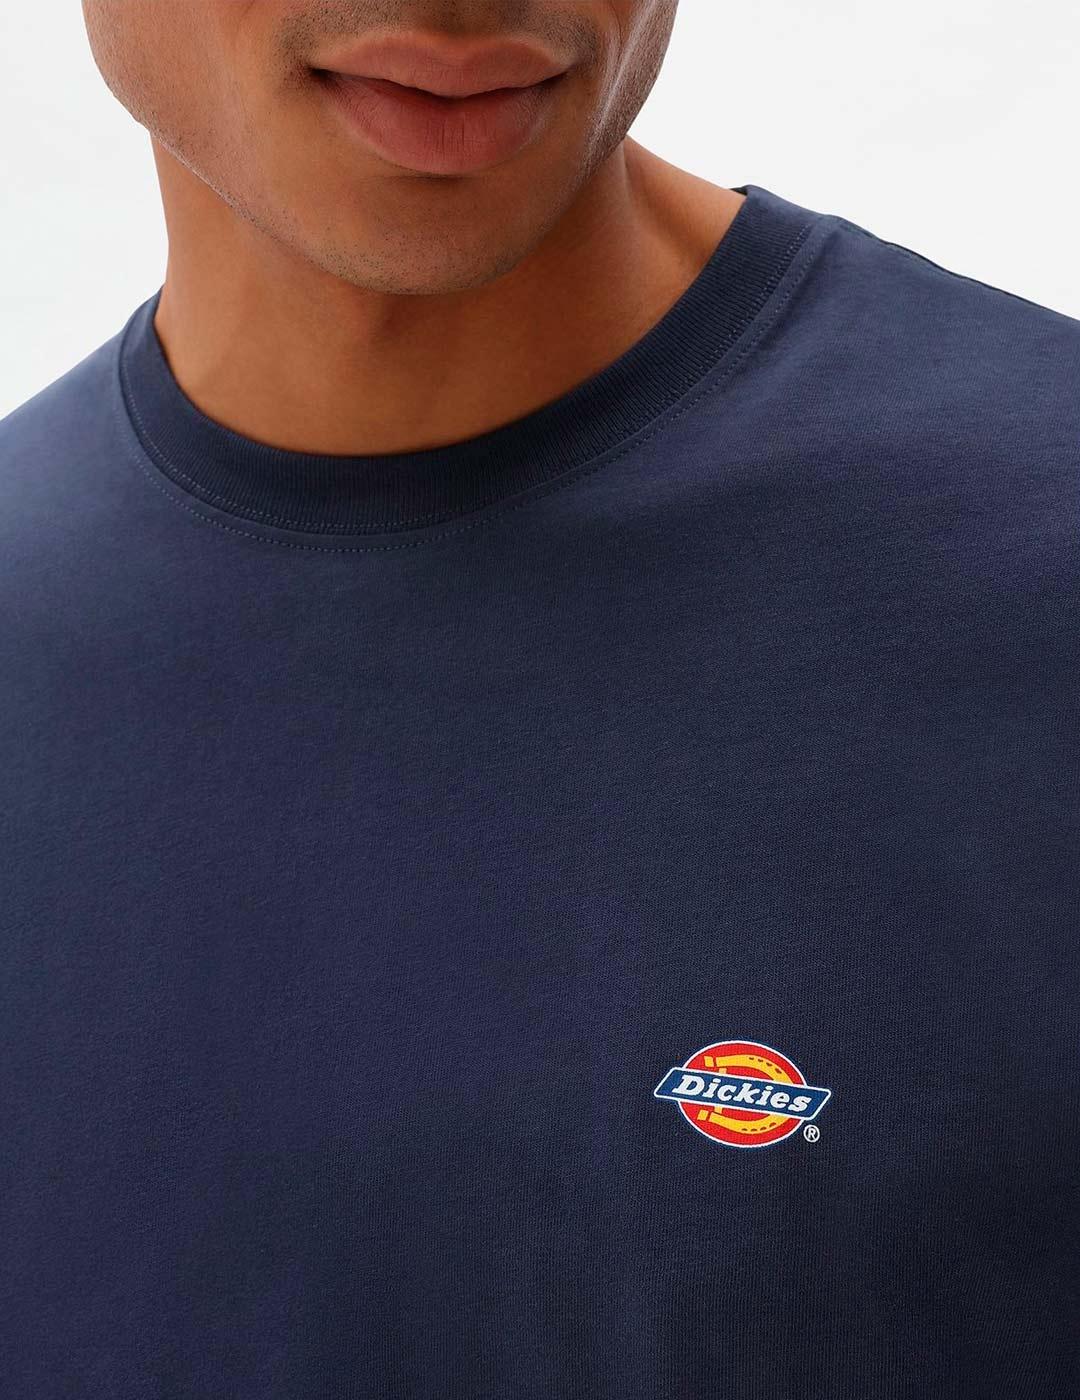 Camiseta DICKIES MAPLETON  - Navy Blue